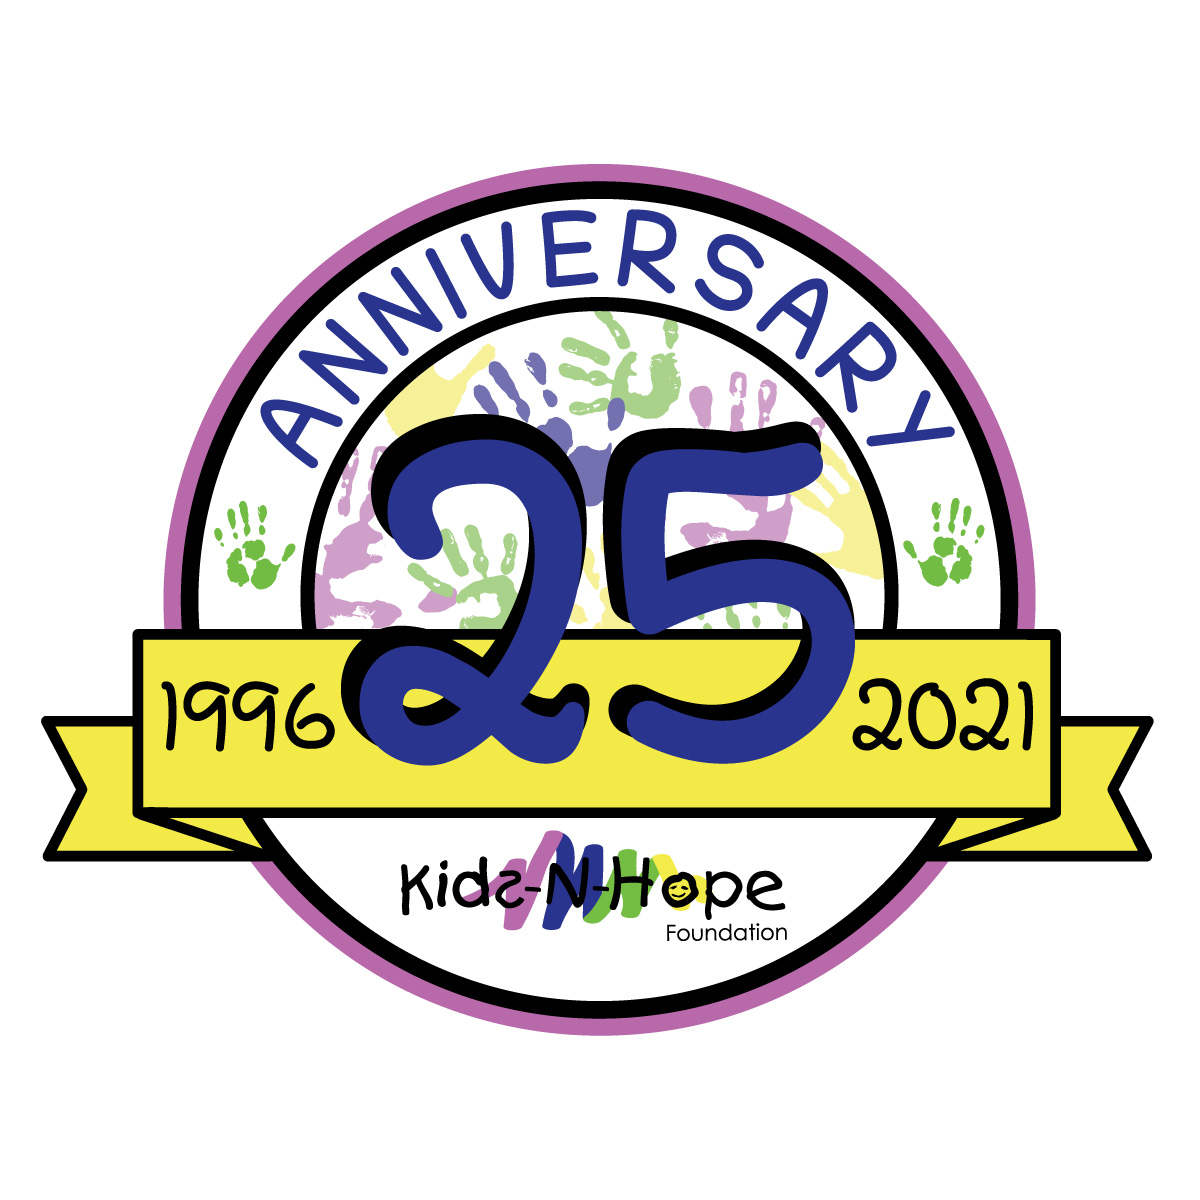 Kids-N-Hope 25th Anniversary Logo